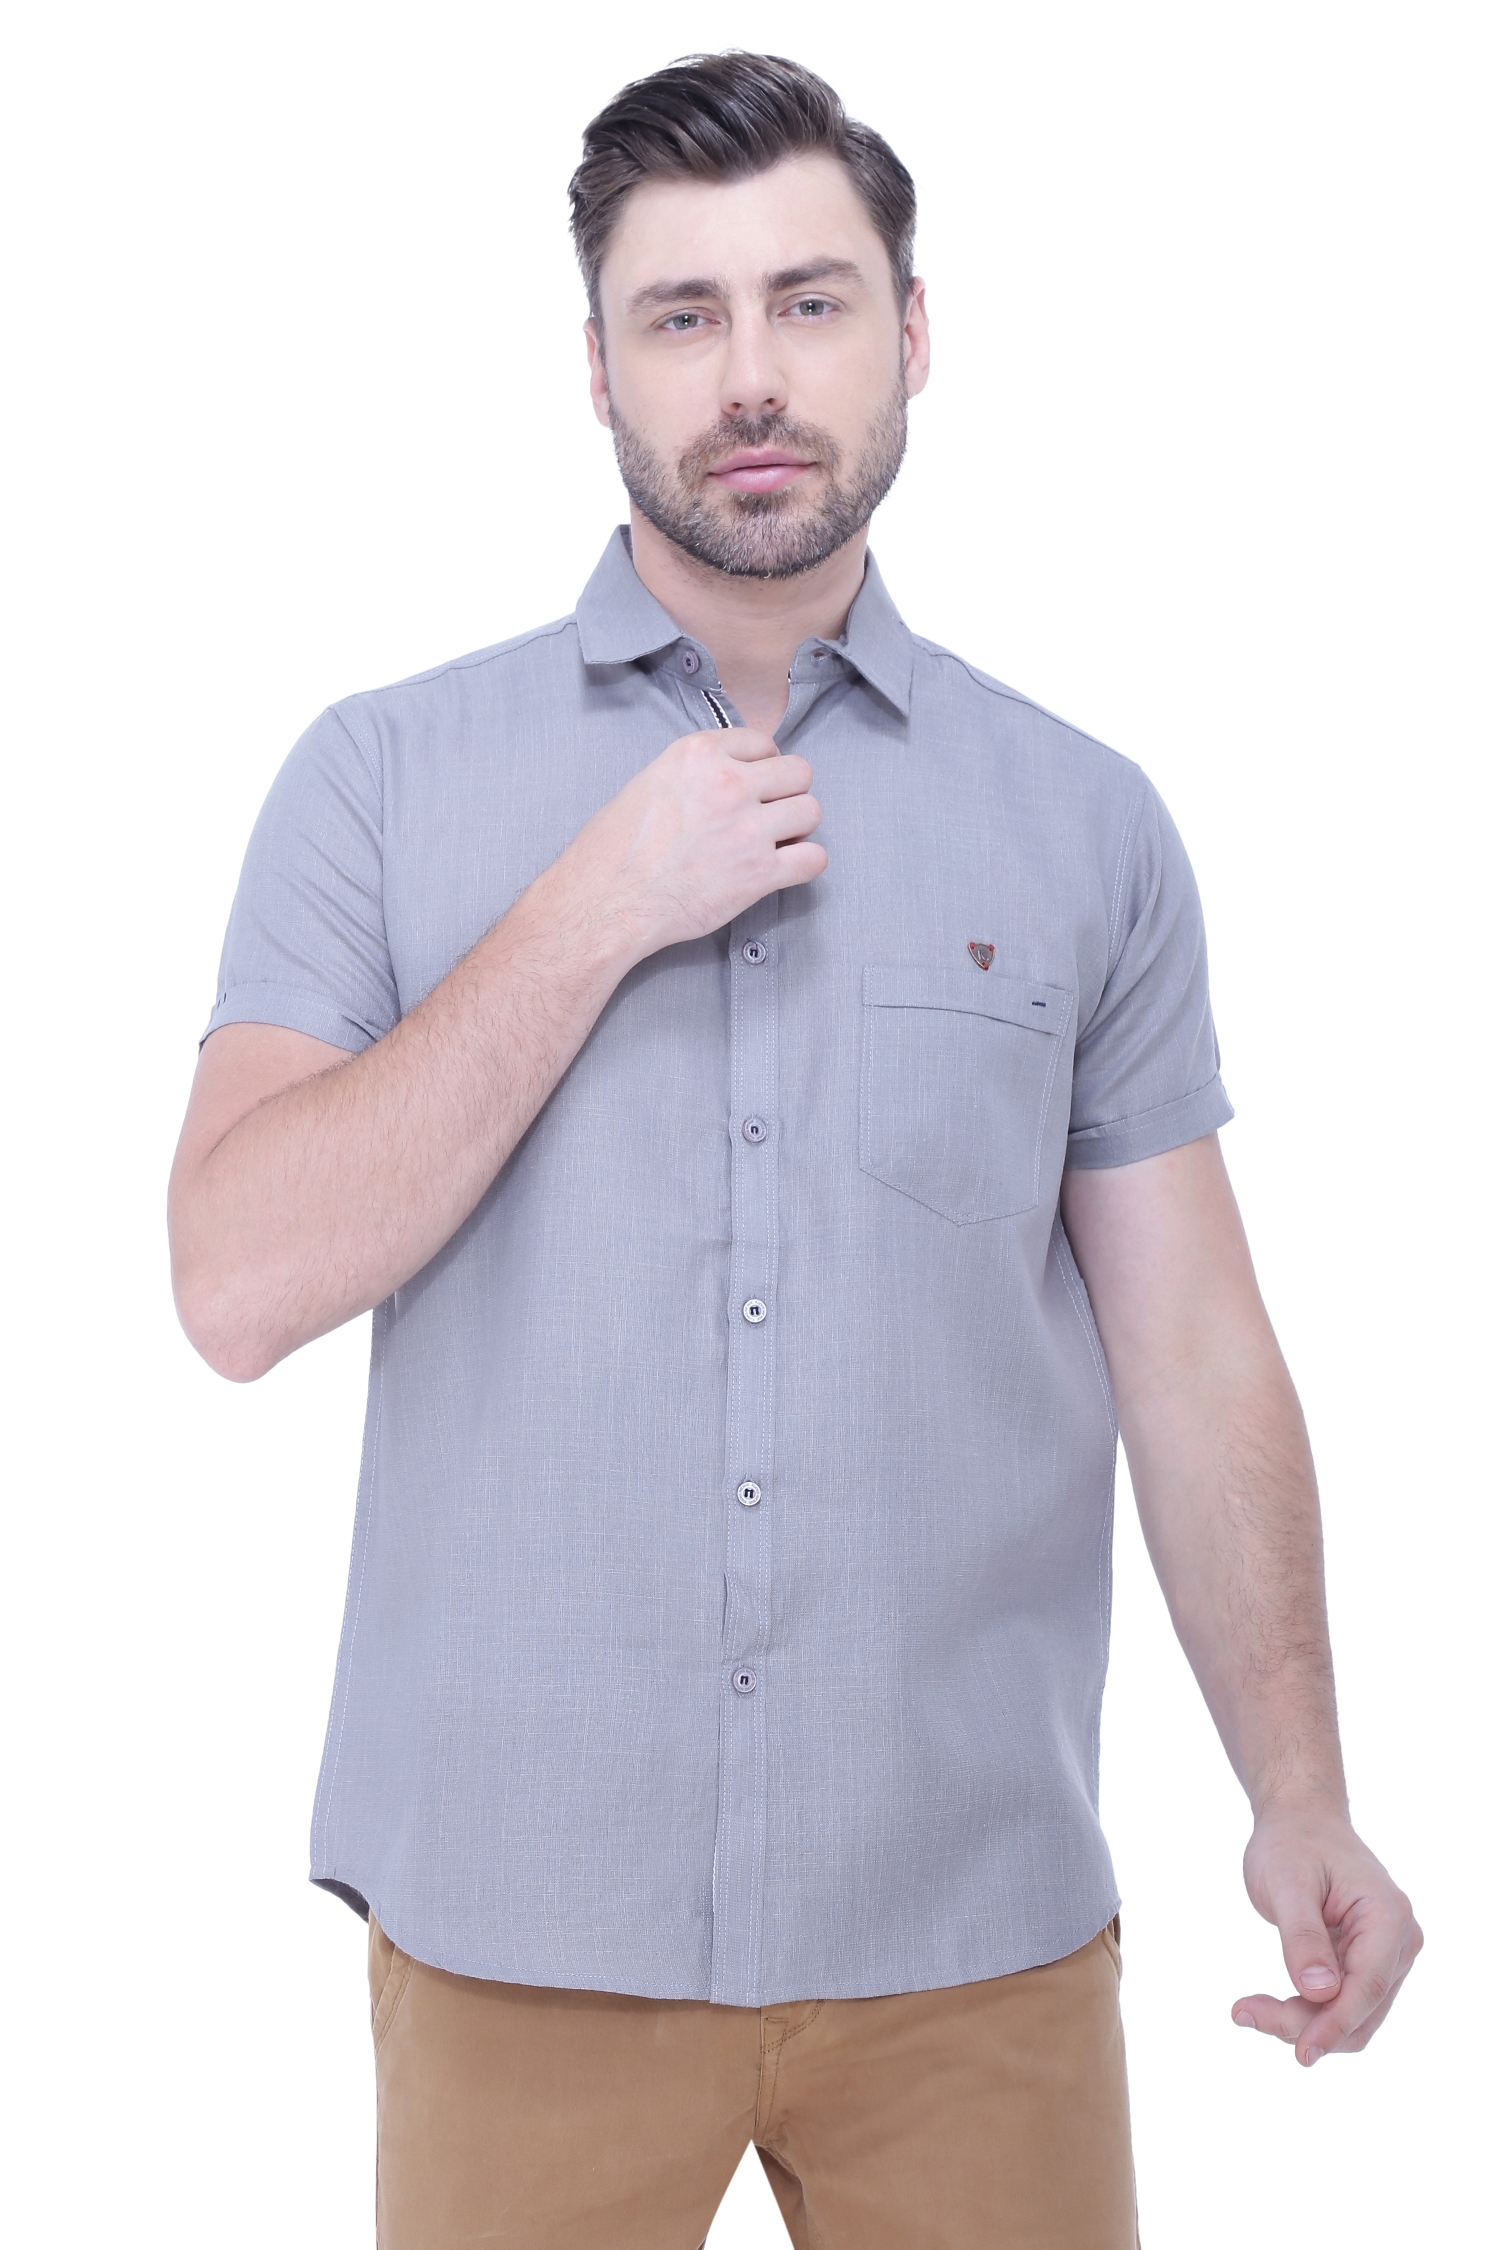 Kuons Avenue | Kuons Avenue Men's Linen Blend Half Sleeves Casual Shirt-KACLHS1236 0